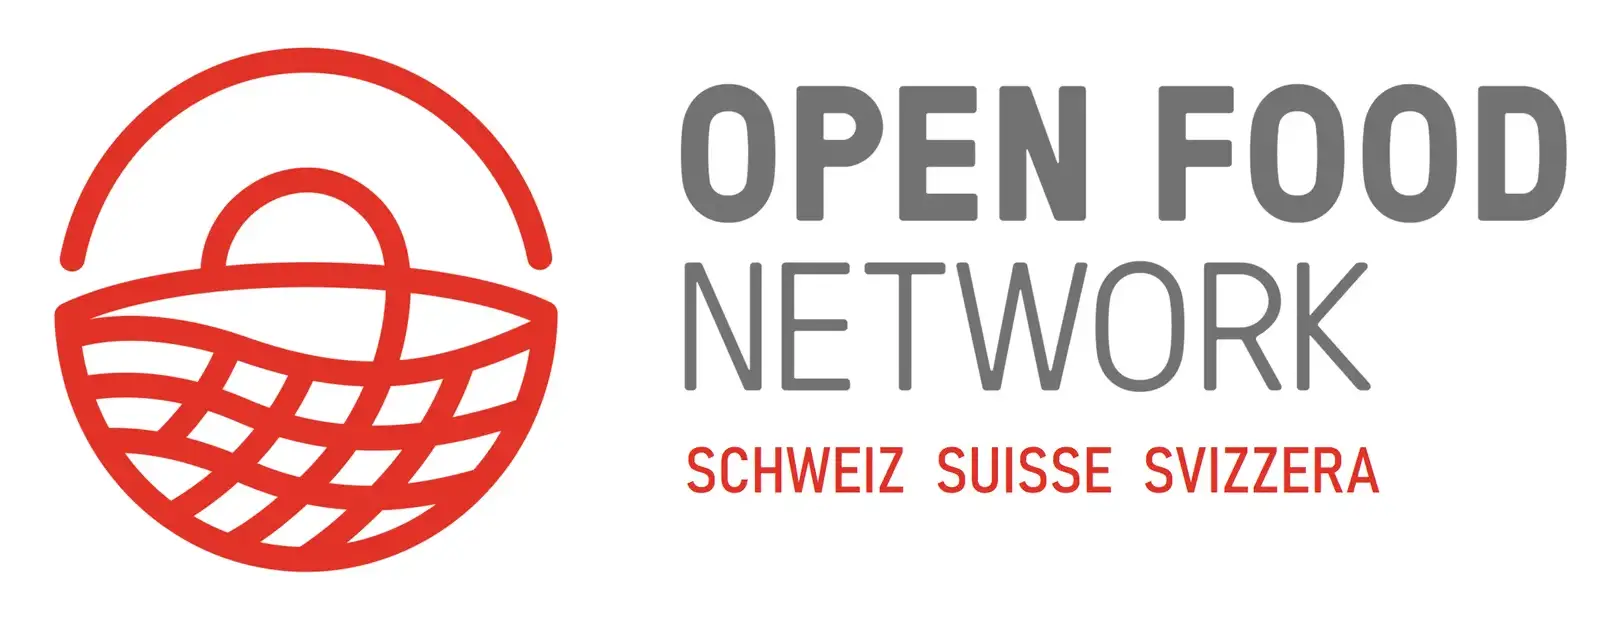 Open Food Network Switzerland Logo